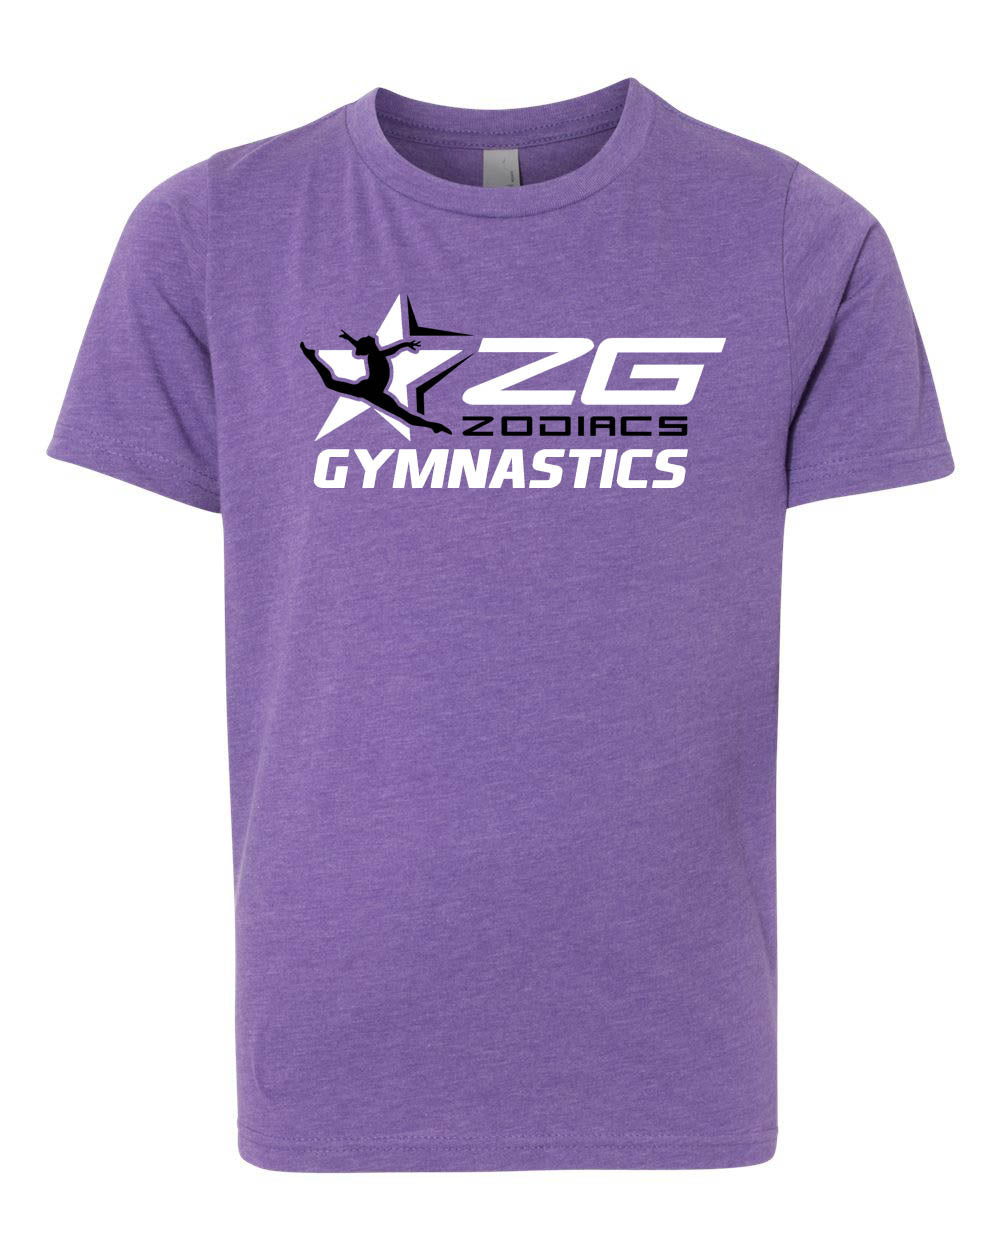 Zodiacs gymnastics T-Shirt Heather Purple